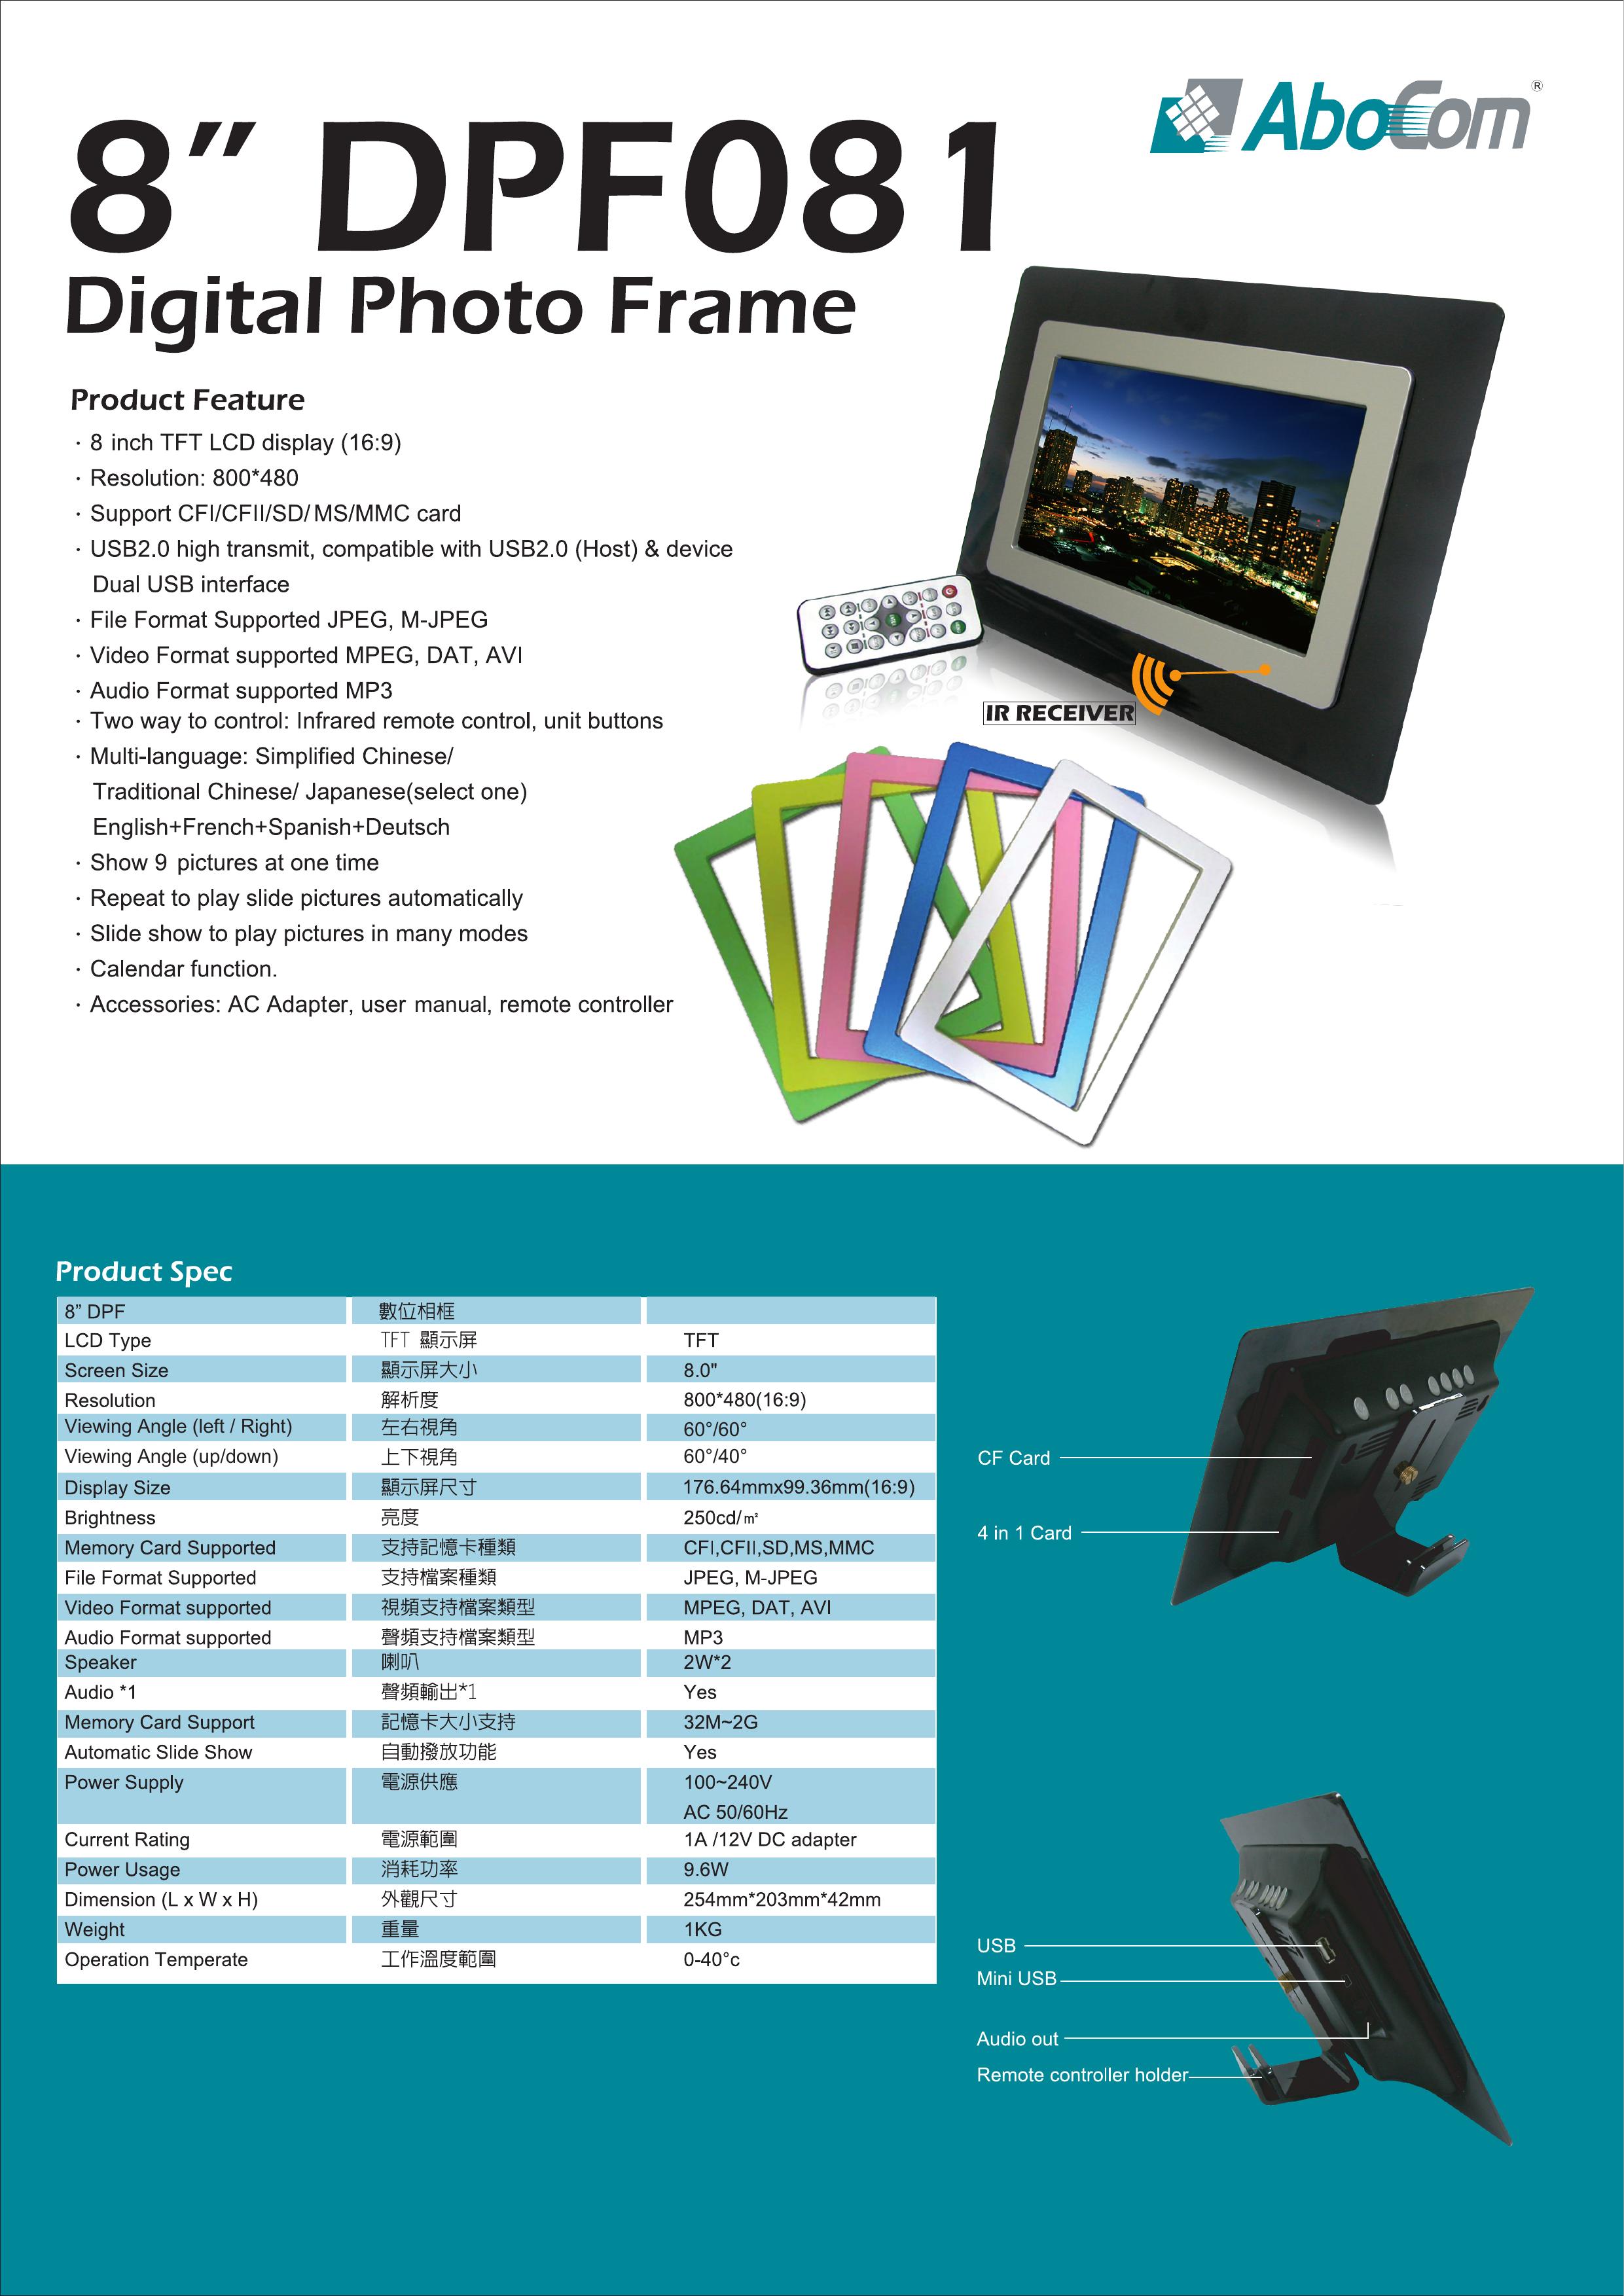 Abocom DPF081 Digital Photo Frame User Manual